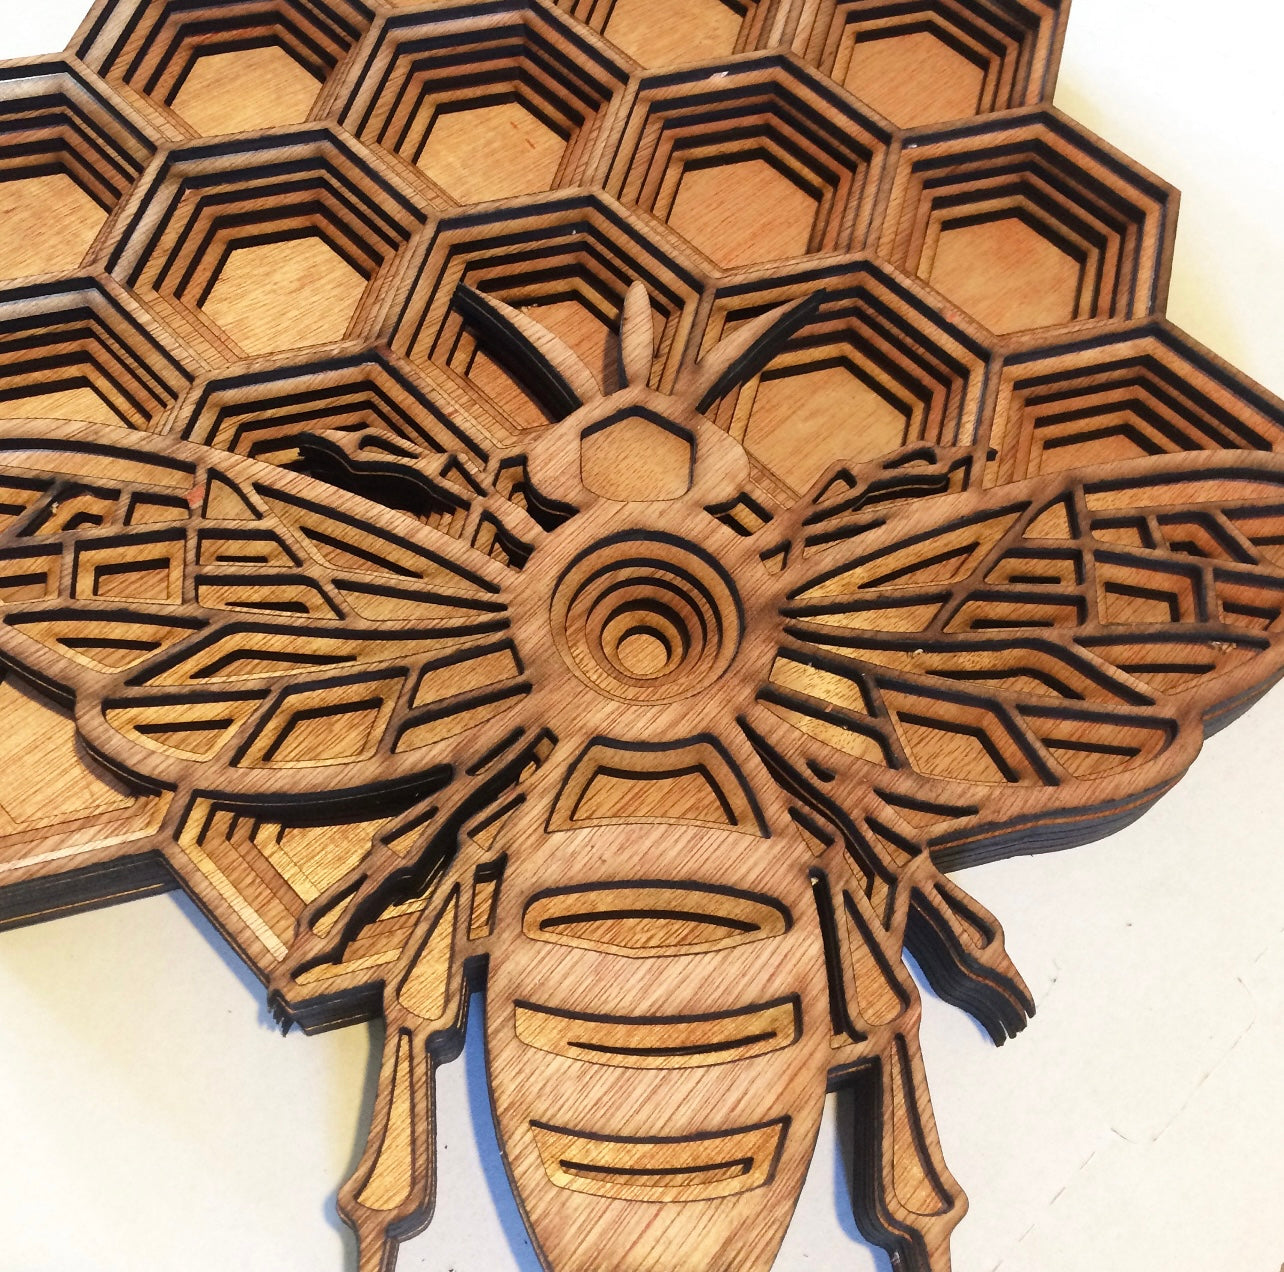 Bee Honeycomb, Multi-Layer Wood